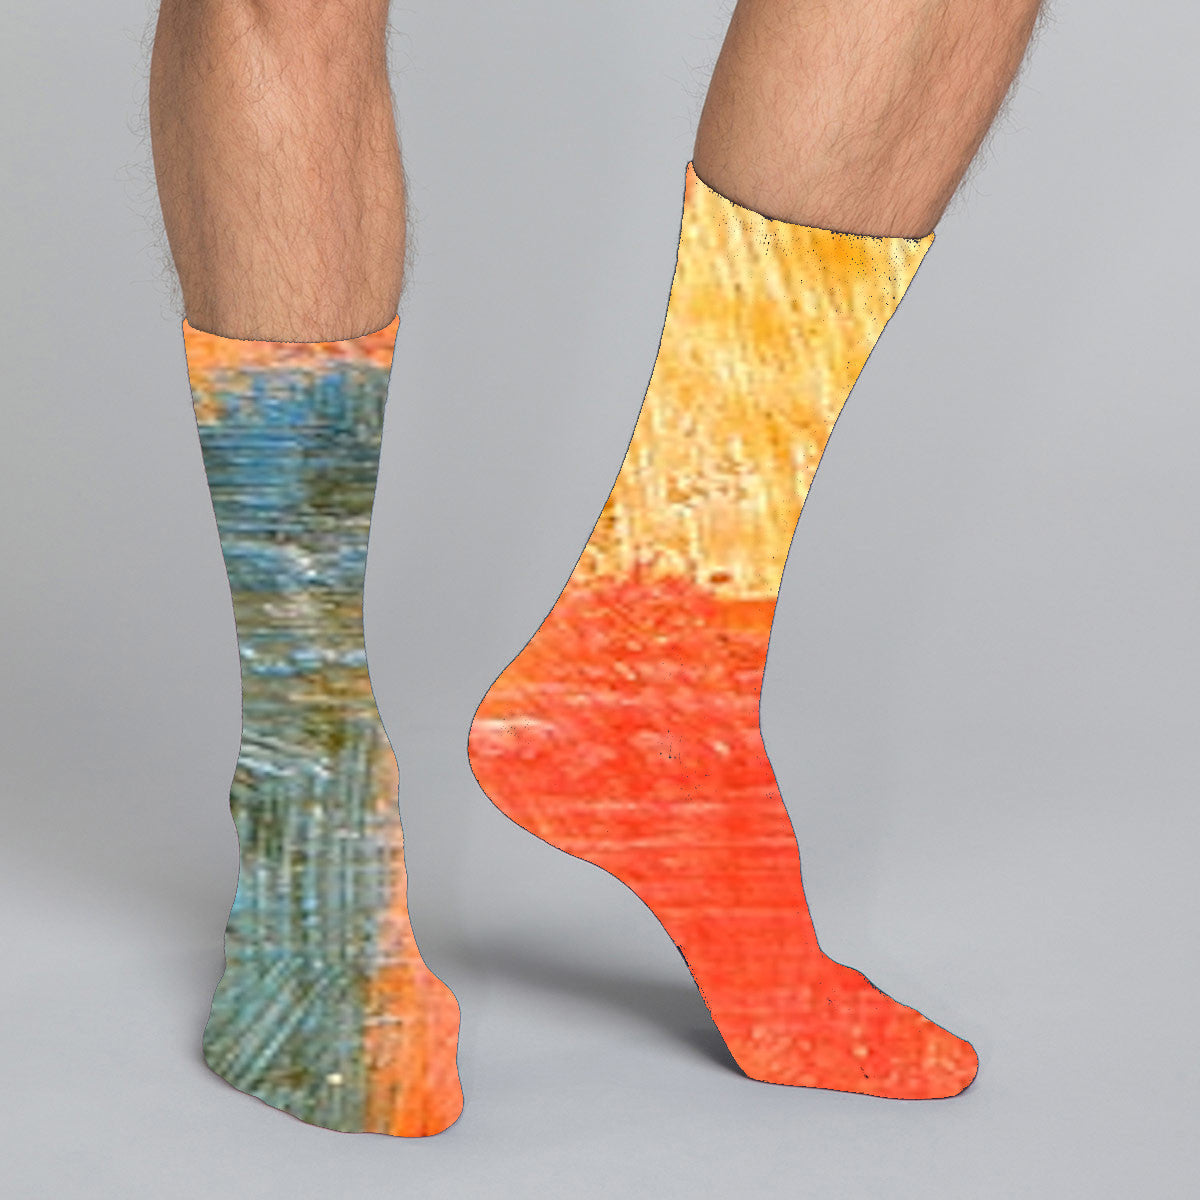 Women's and men's casual crew socks in unique colorful design celebrating food, fashion, fitness, fun